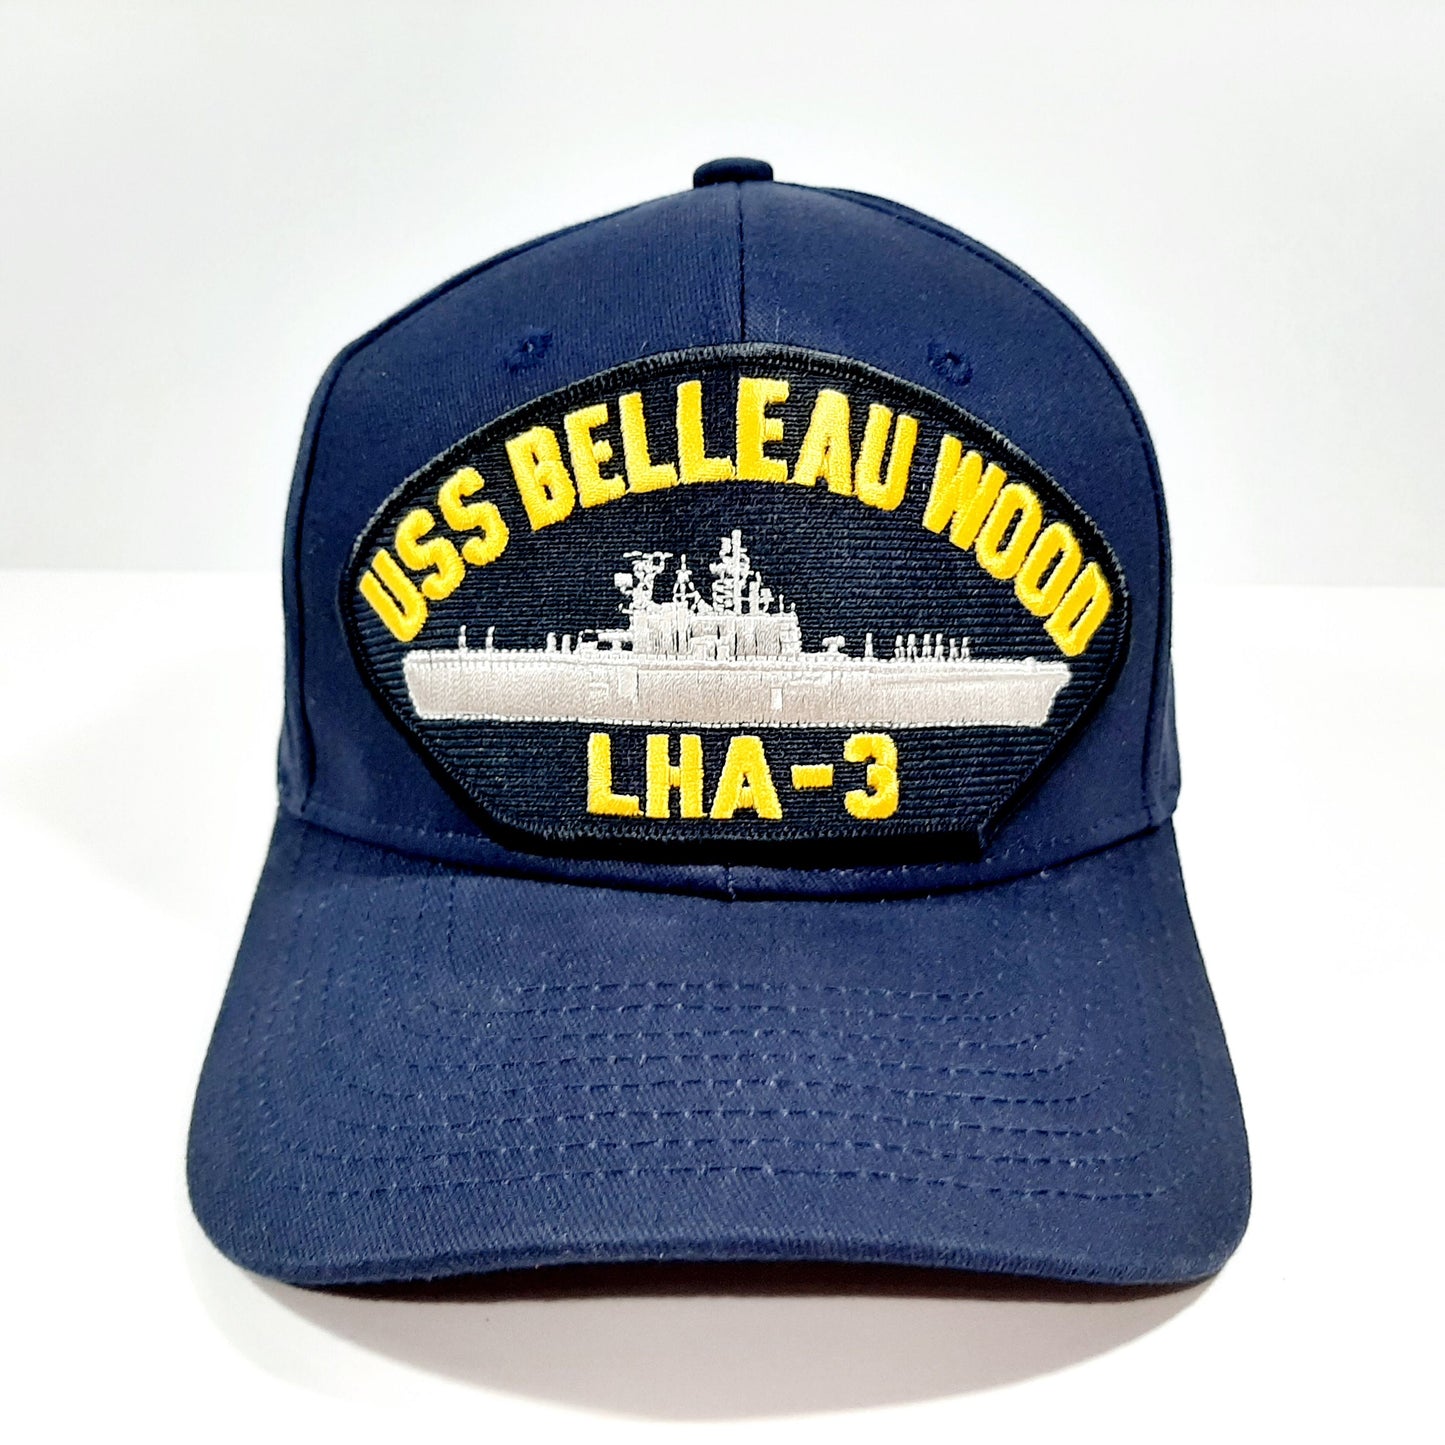 USS Belleau Wood LHA-3 Embroidered Patch Hat Baseball Cap Adjustable Blue